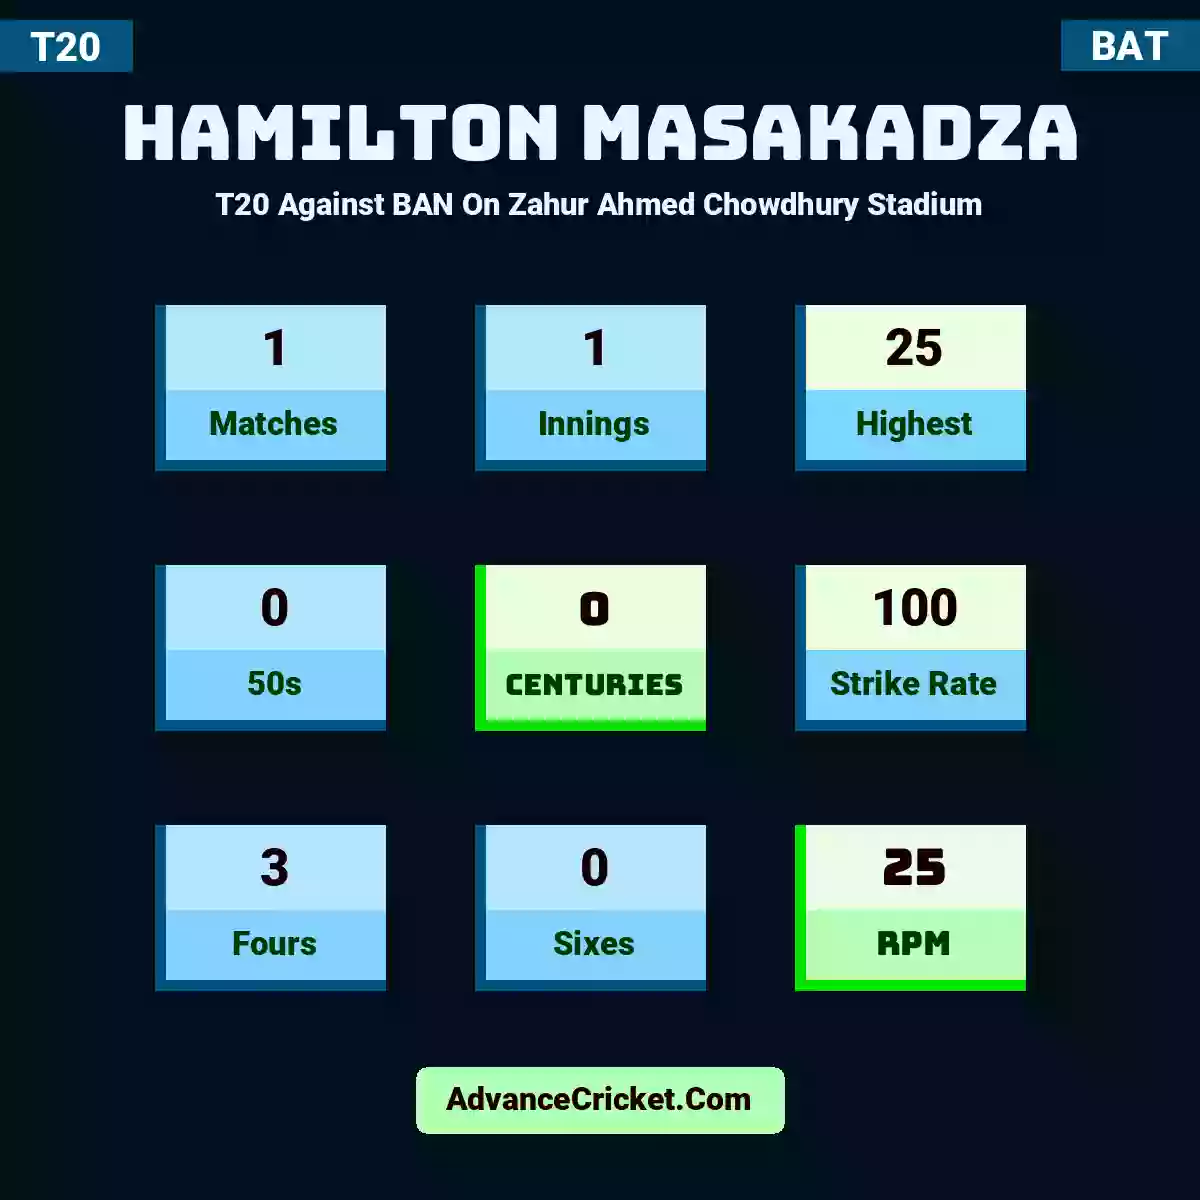 Hamilton Masakadza T20  Against BAN On Zahur Ahmed Chowdhury Stadium, Hamilton Masakadza played 1 matches, scored 25 runs as highest, 0 half-centuries, and 0 centuries, with a strike rate of 100. H.Masakadza hit 3 fours and 0 sixes, with an RPM of 25.